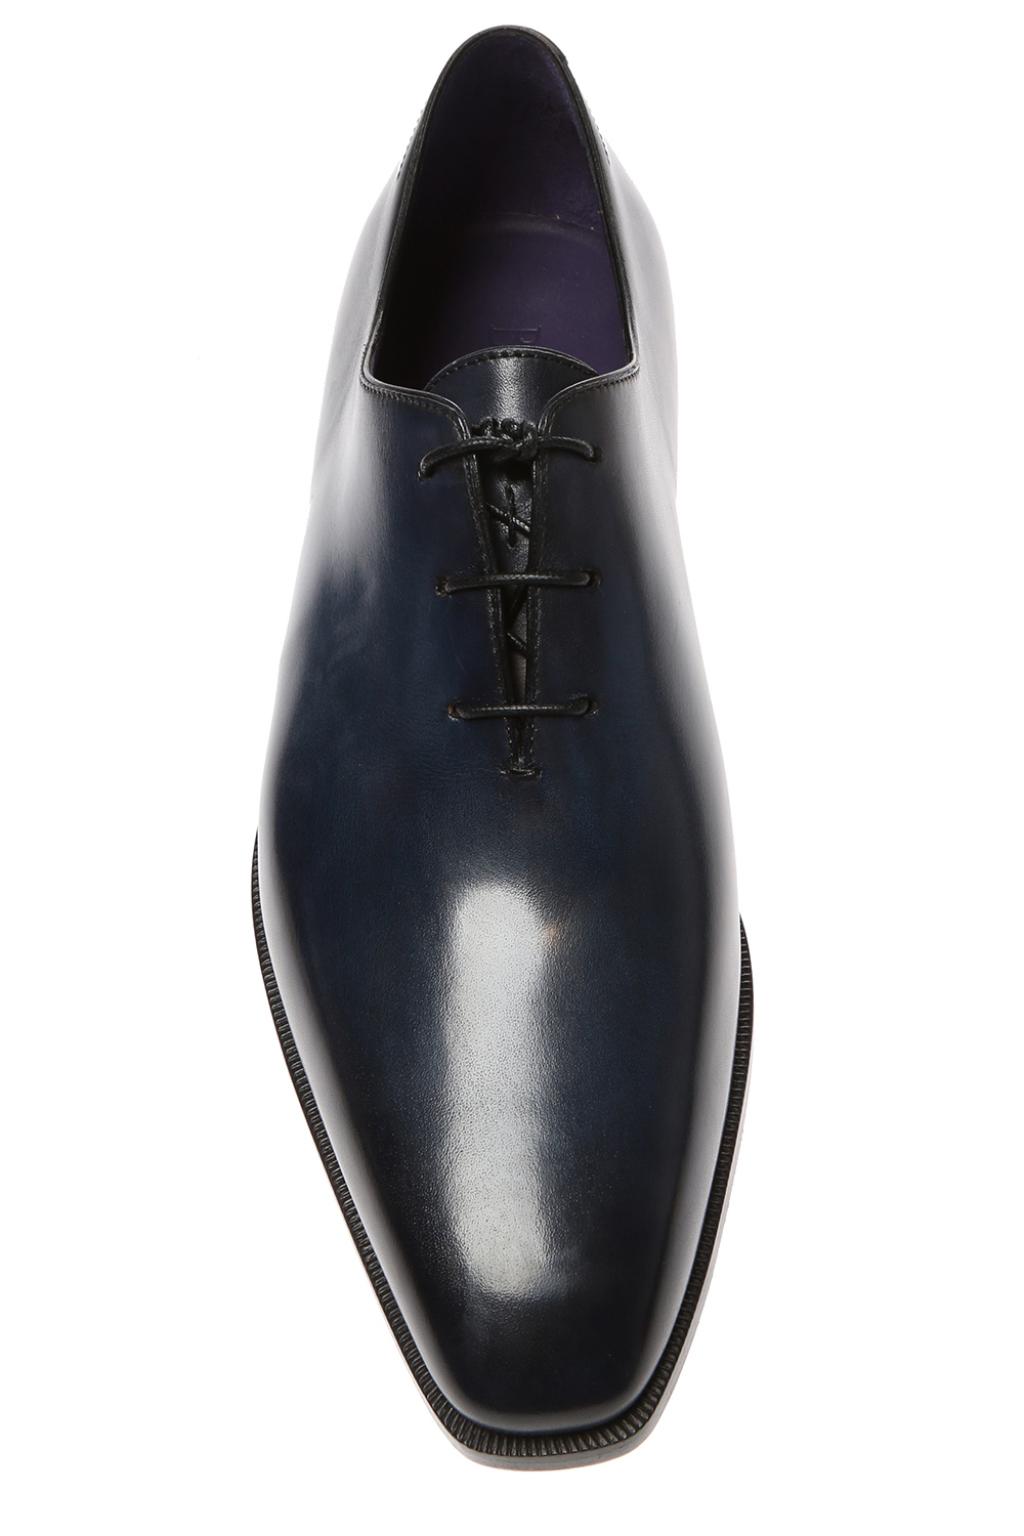 Berluti Men's Leather Oxford Shoes